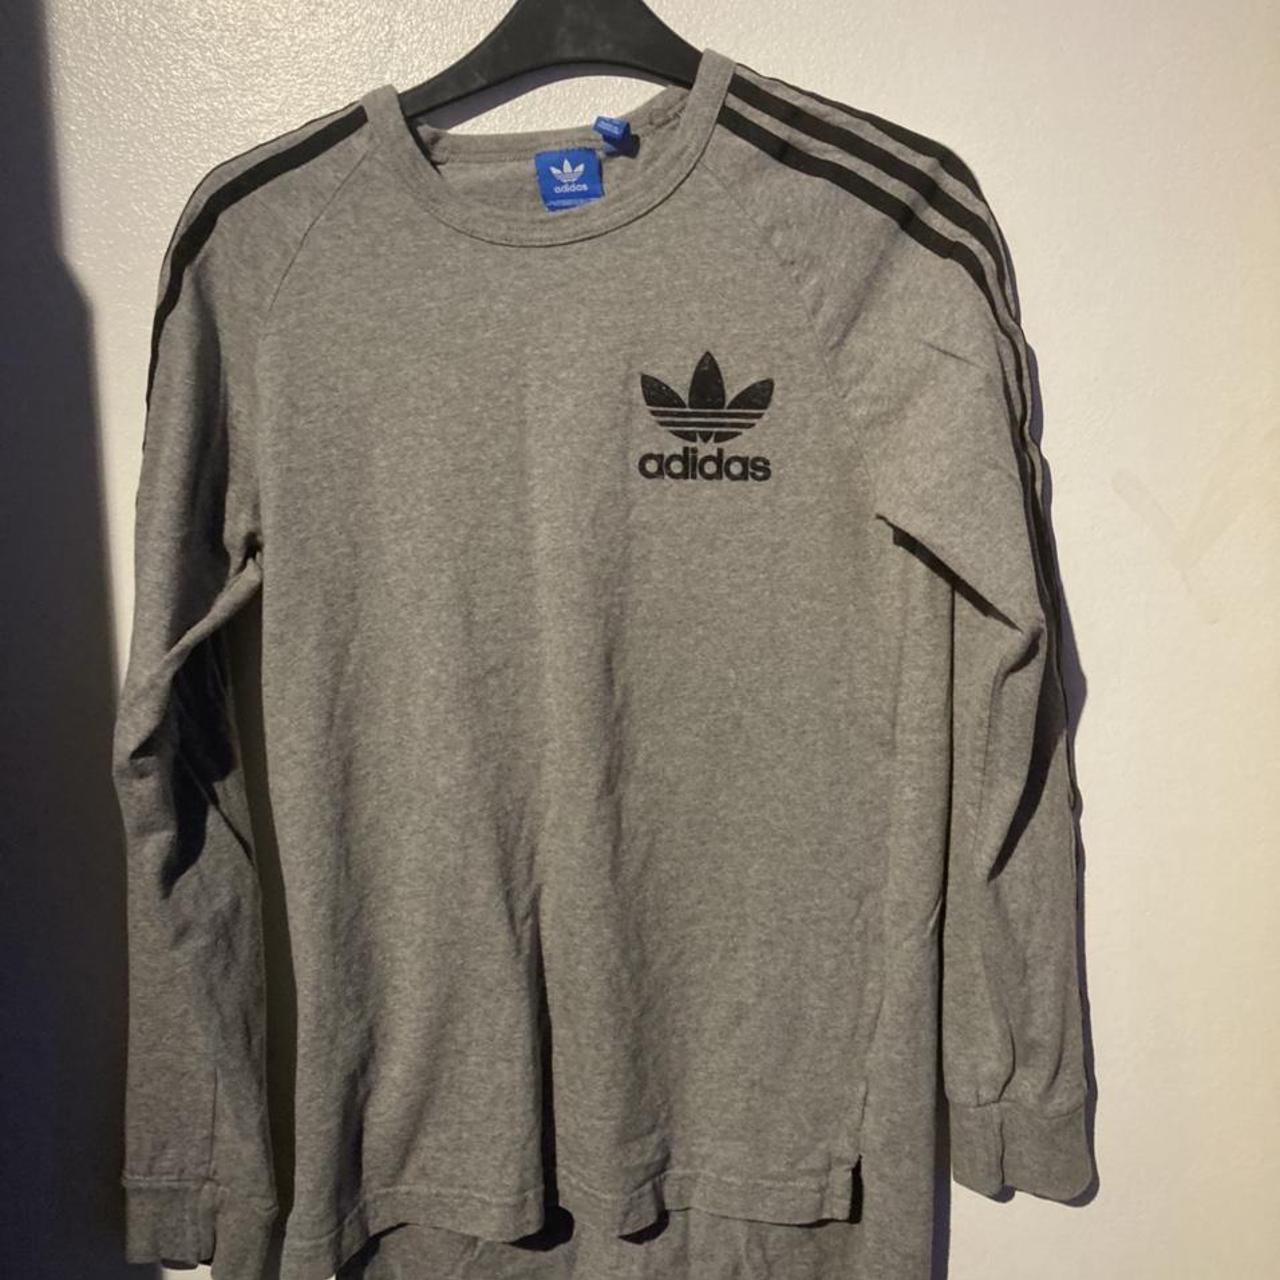 Adidas Men's Grey and Black T-shirt | Depop